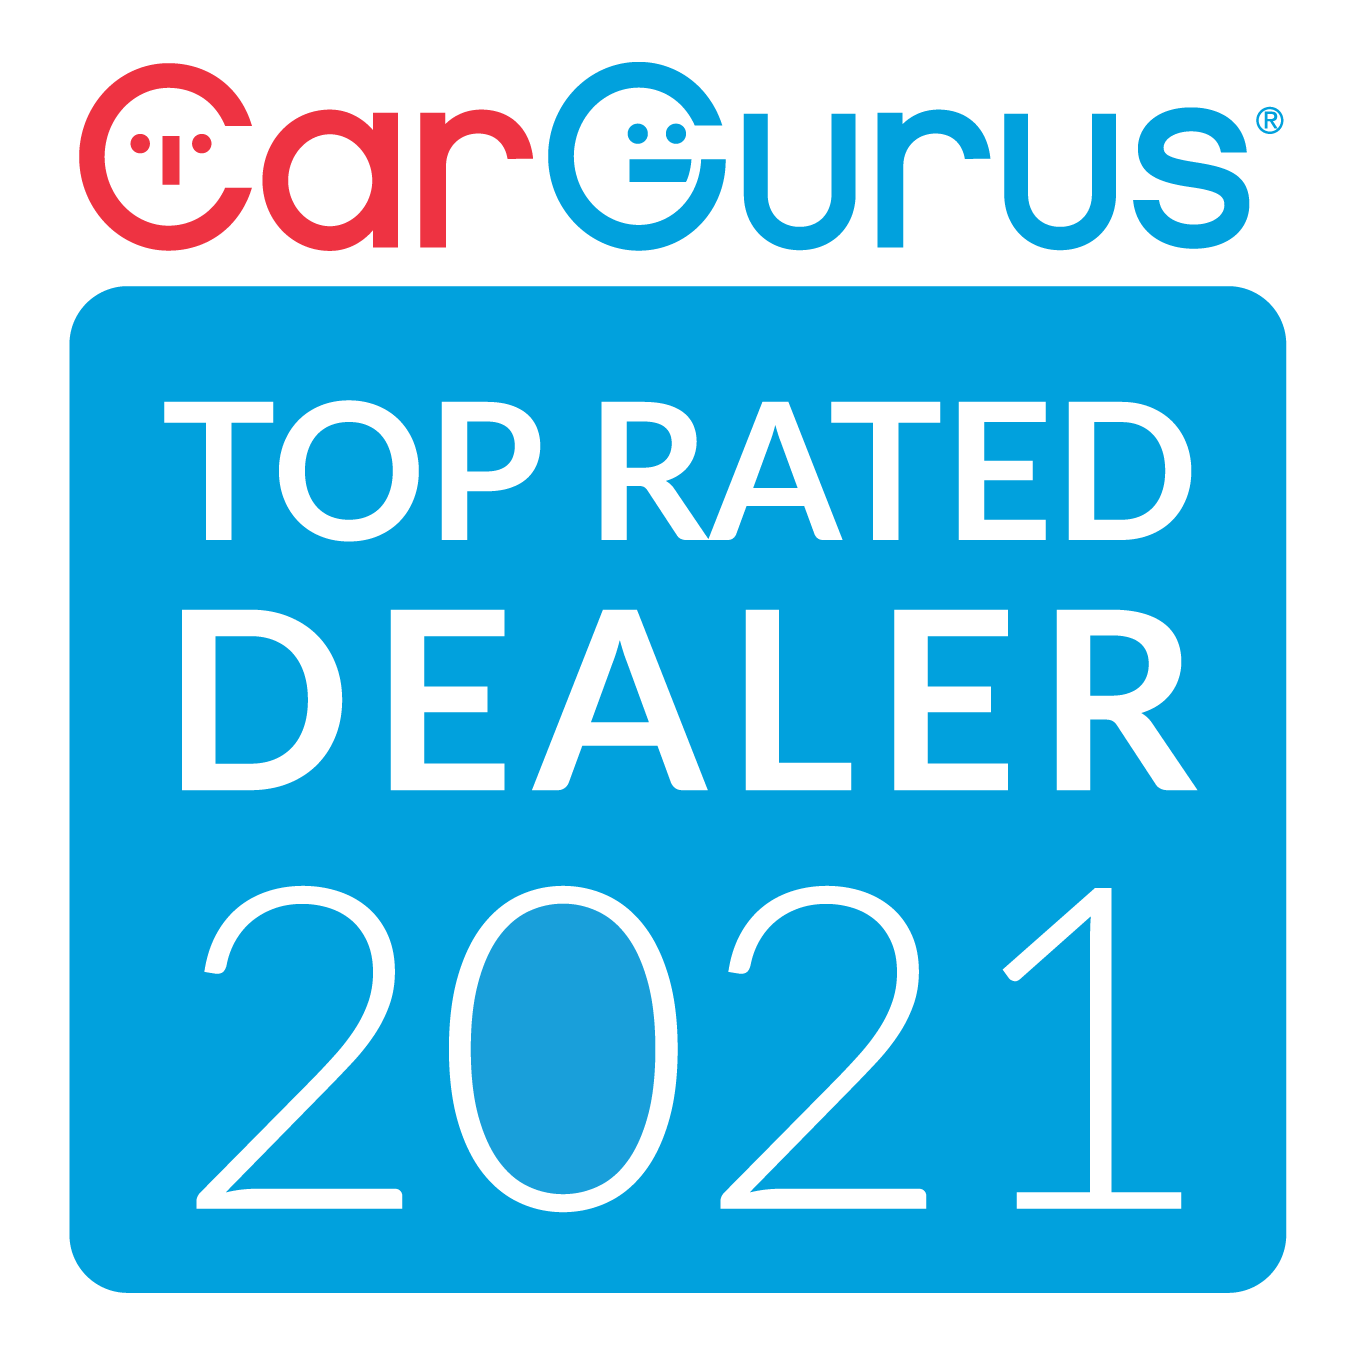 CarGurus Top Rated Dealer 2021 Badge